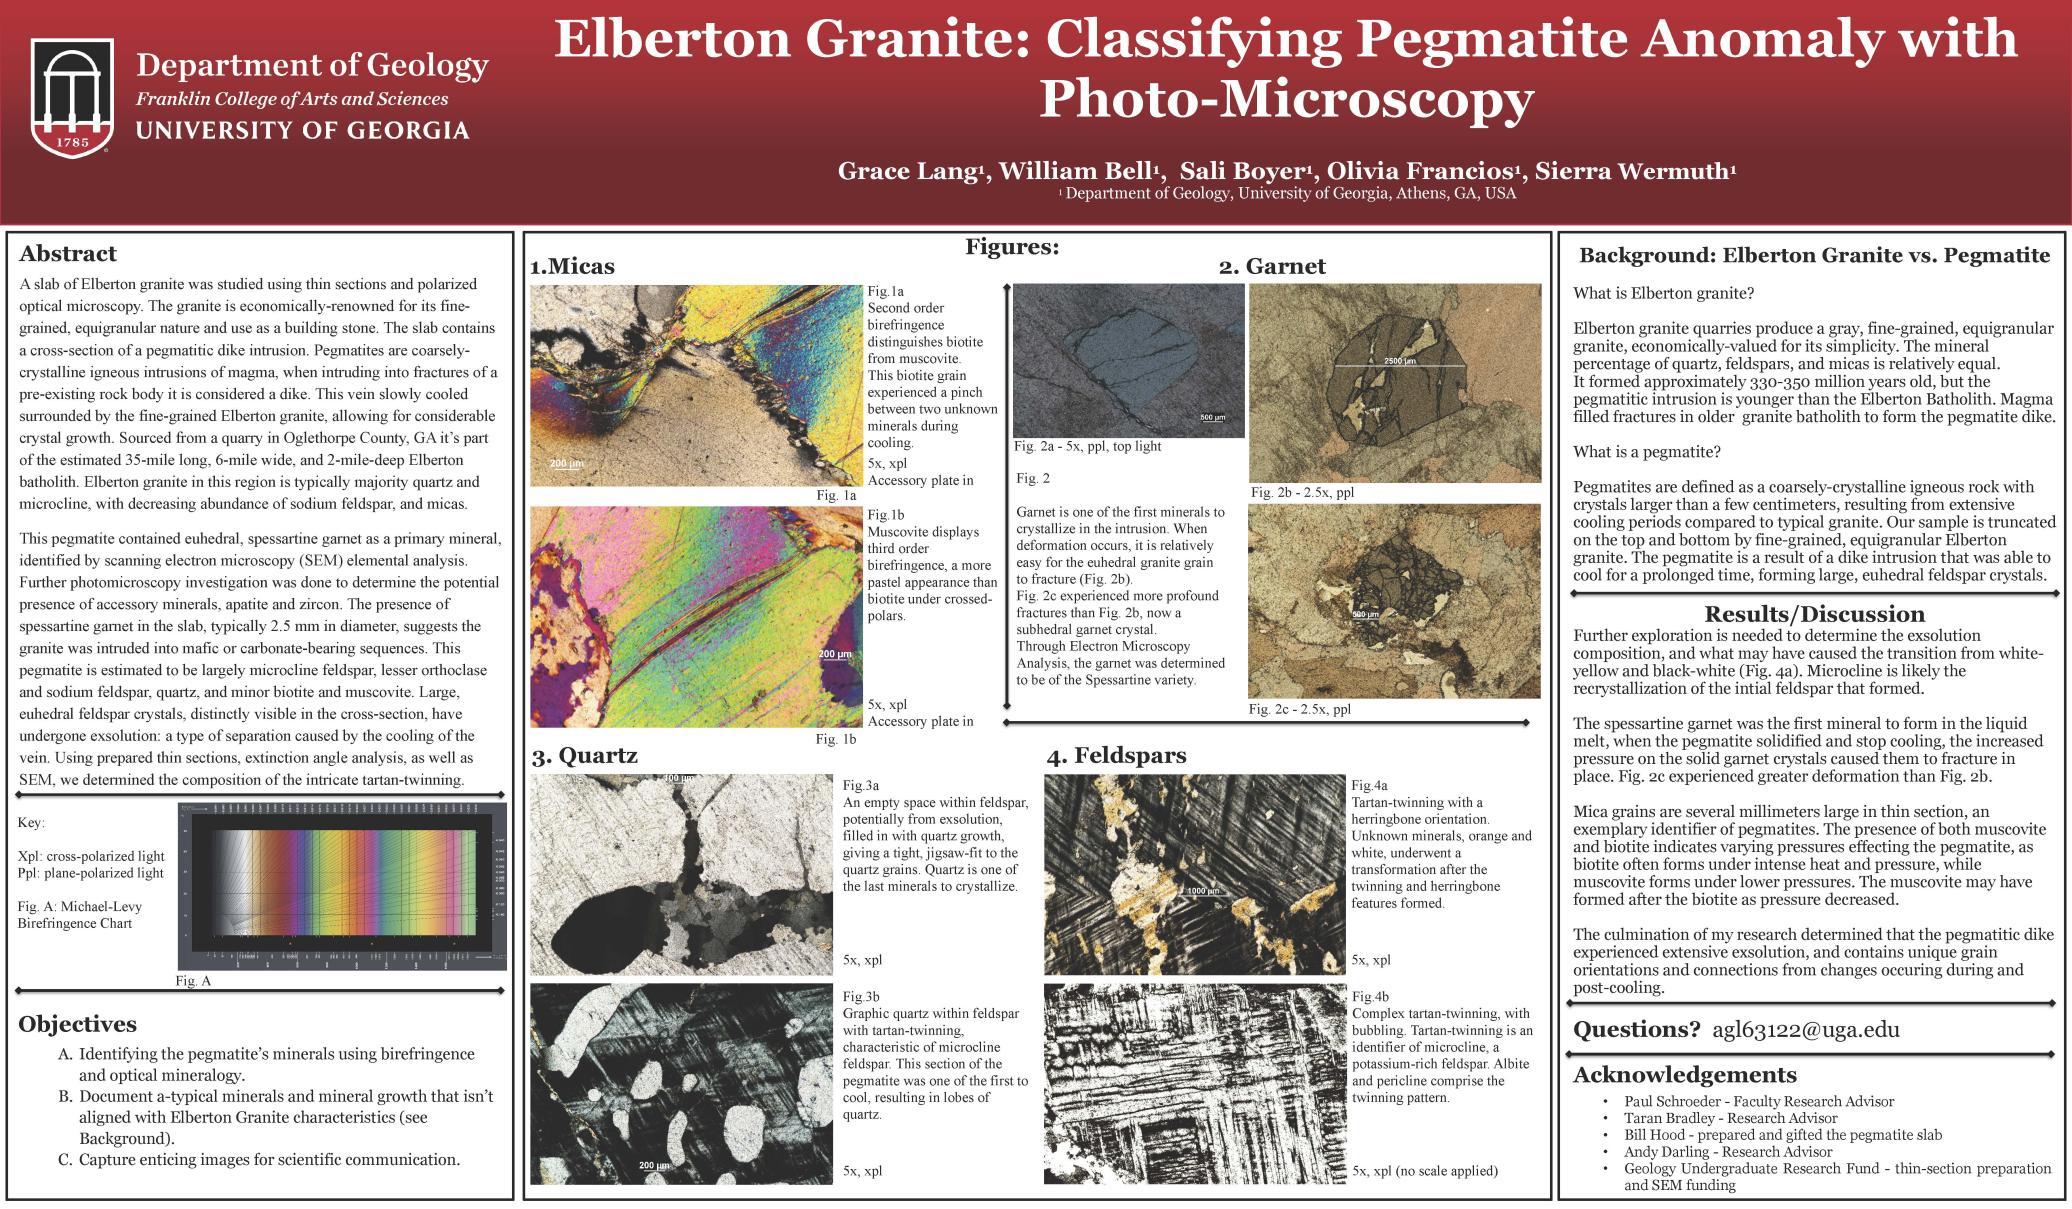 Grace Lang - Elberton Granite: Classifying Pegmatite Anomaly with Photo-Microscopy